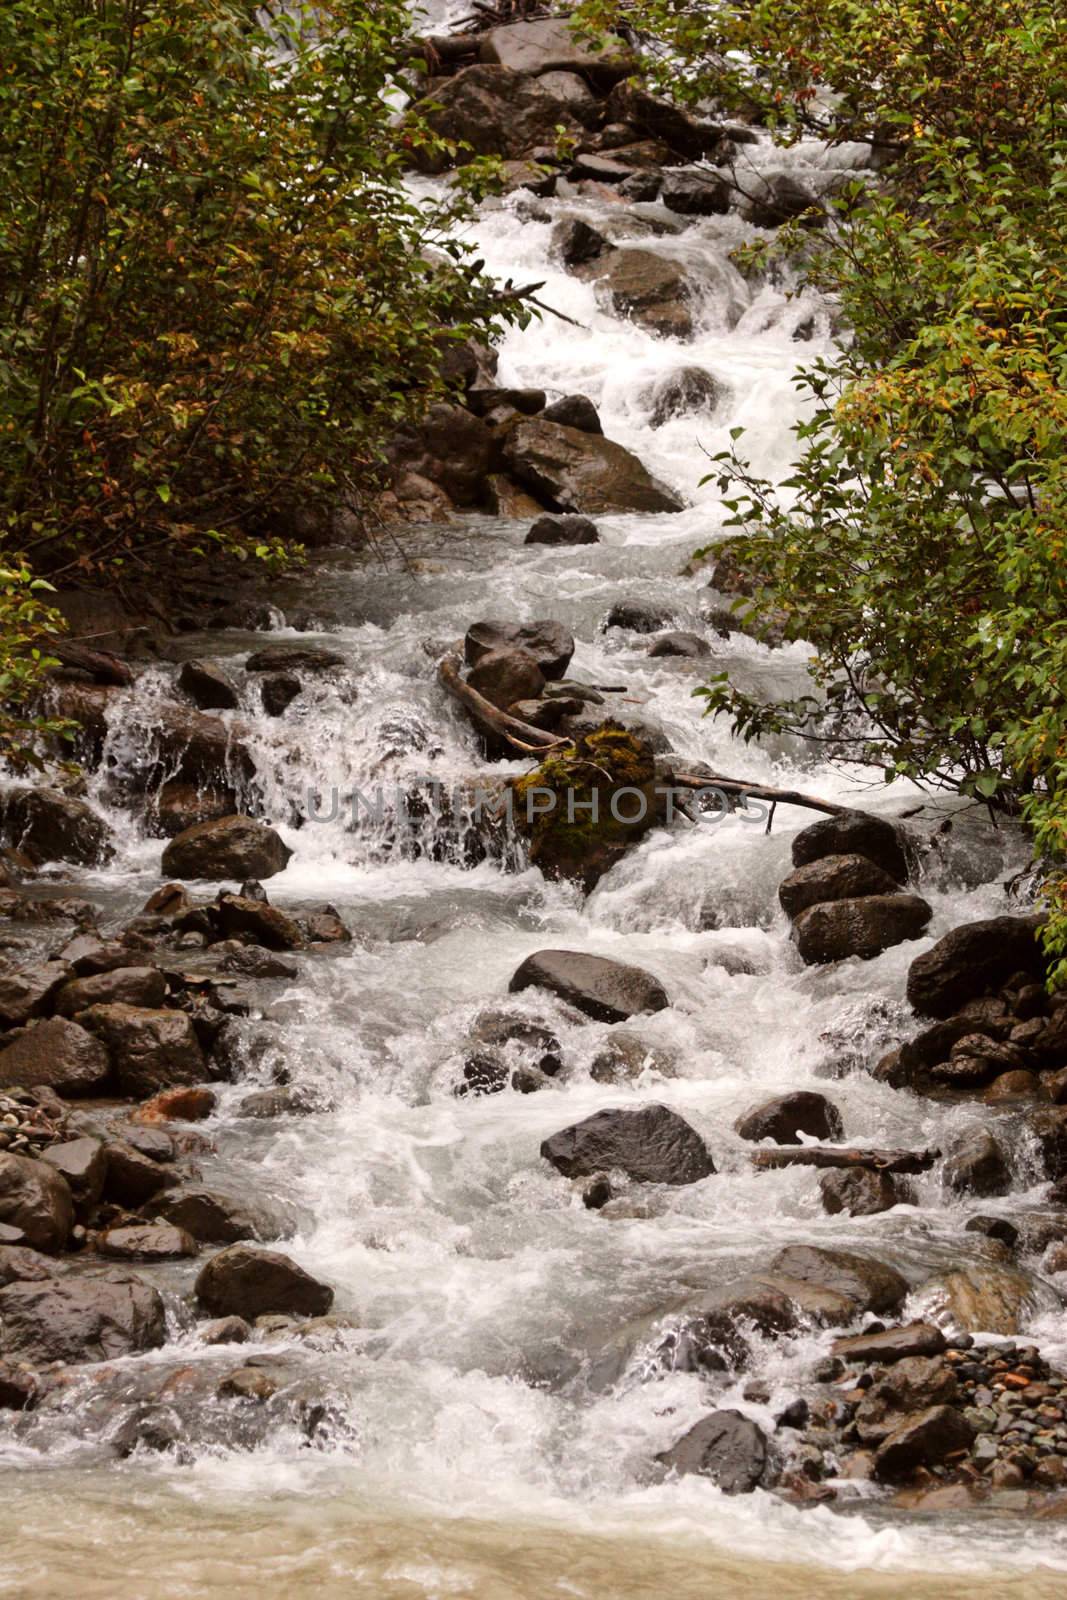 Swift flowing mountain stream in British Columbia